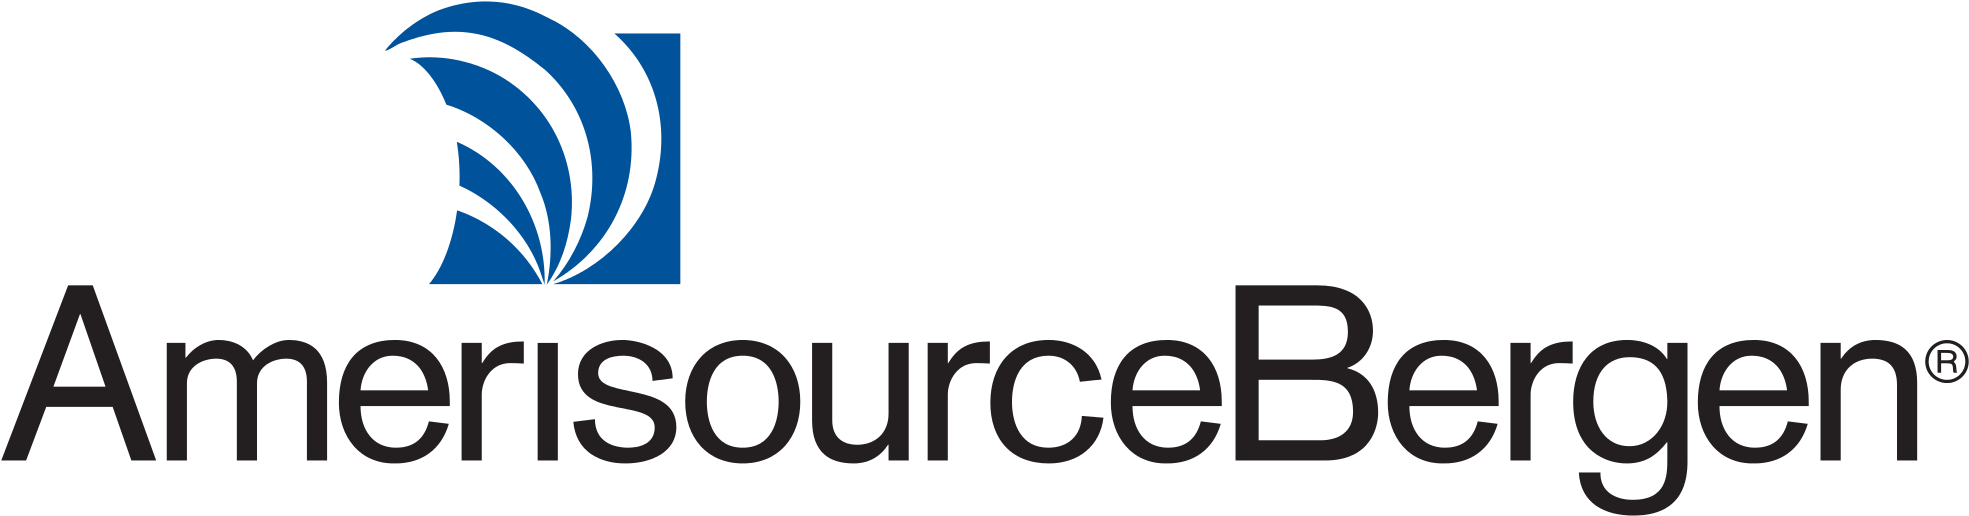 Open - Amerisourcebergen Logo - Free Transparent PNG Download - PNGkey